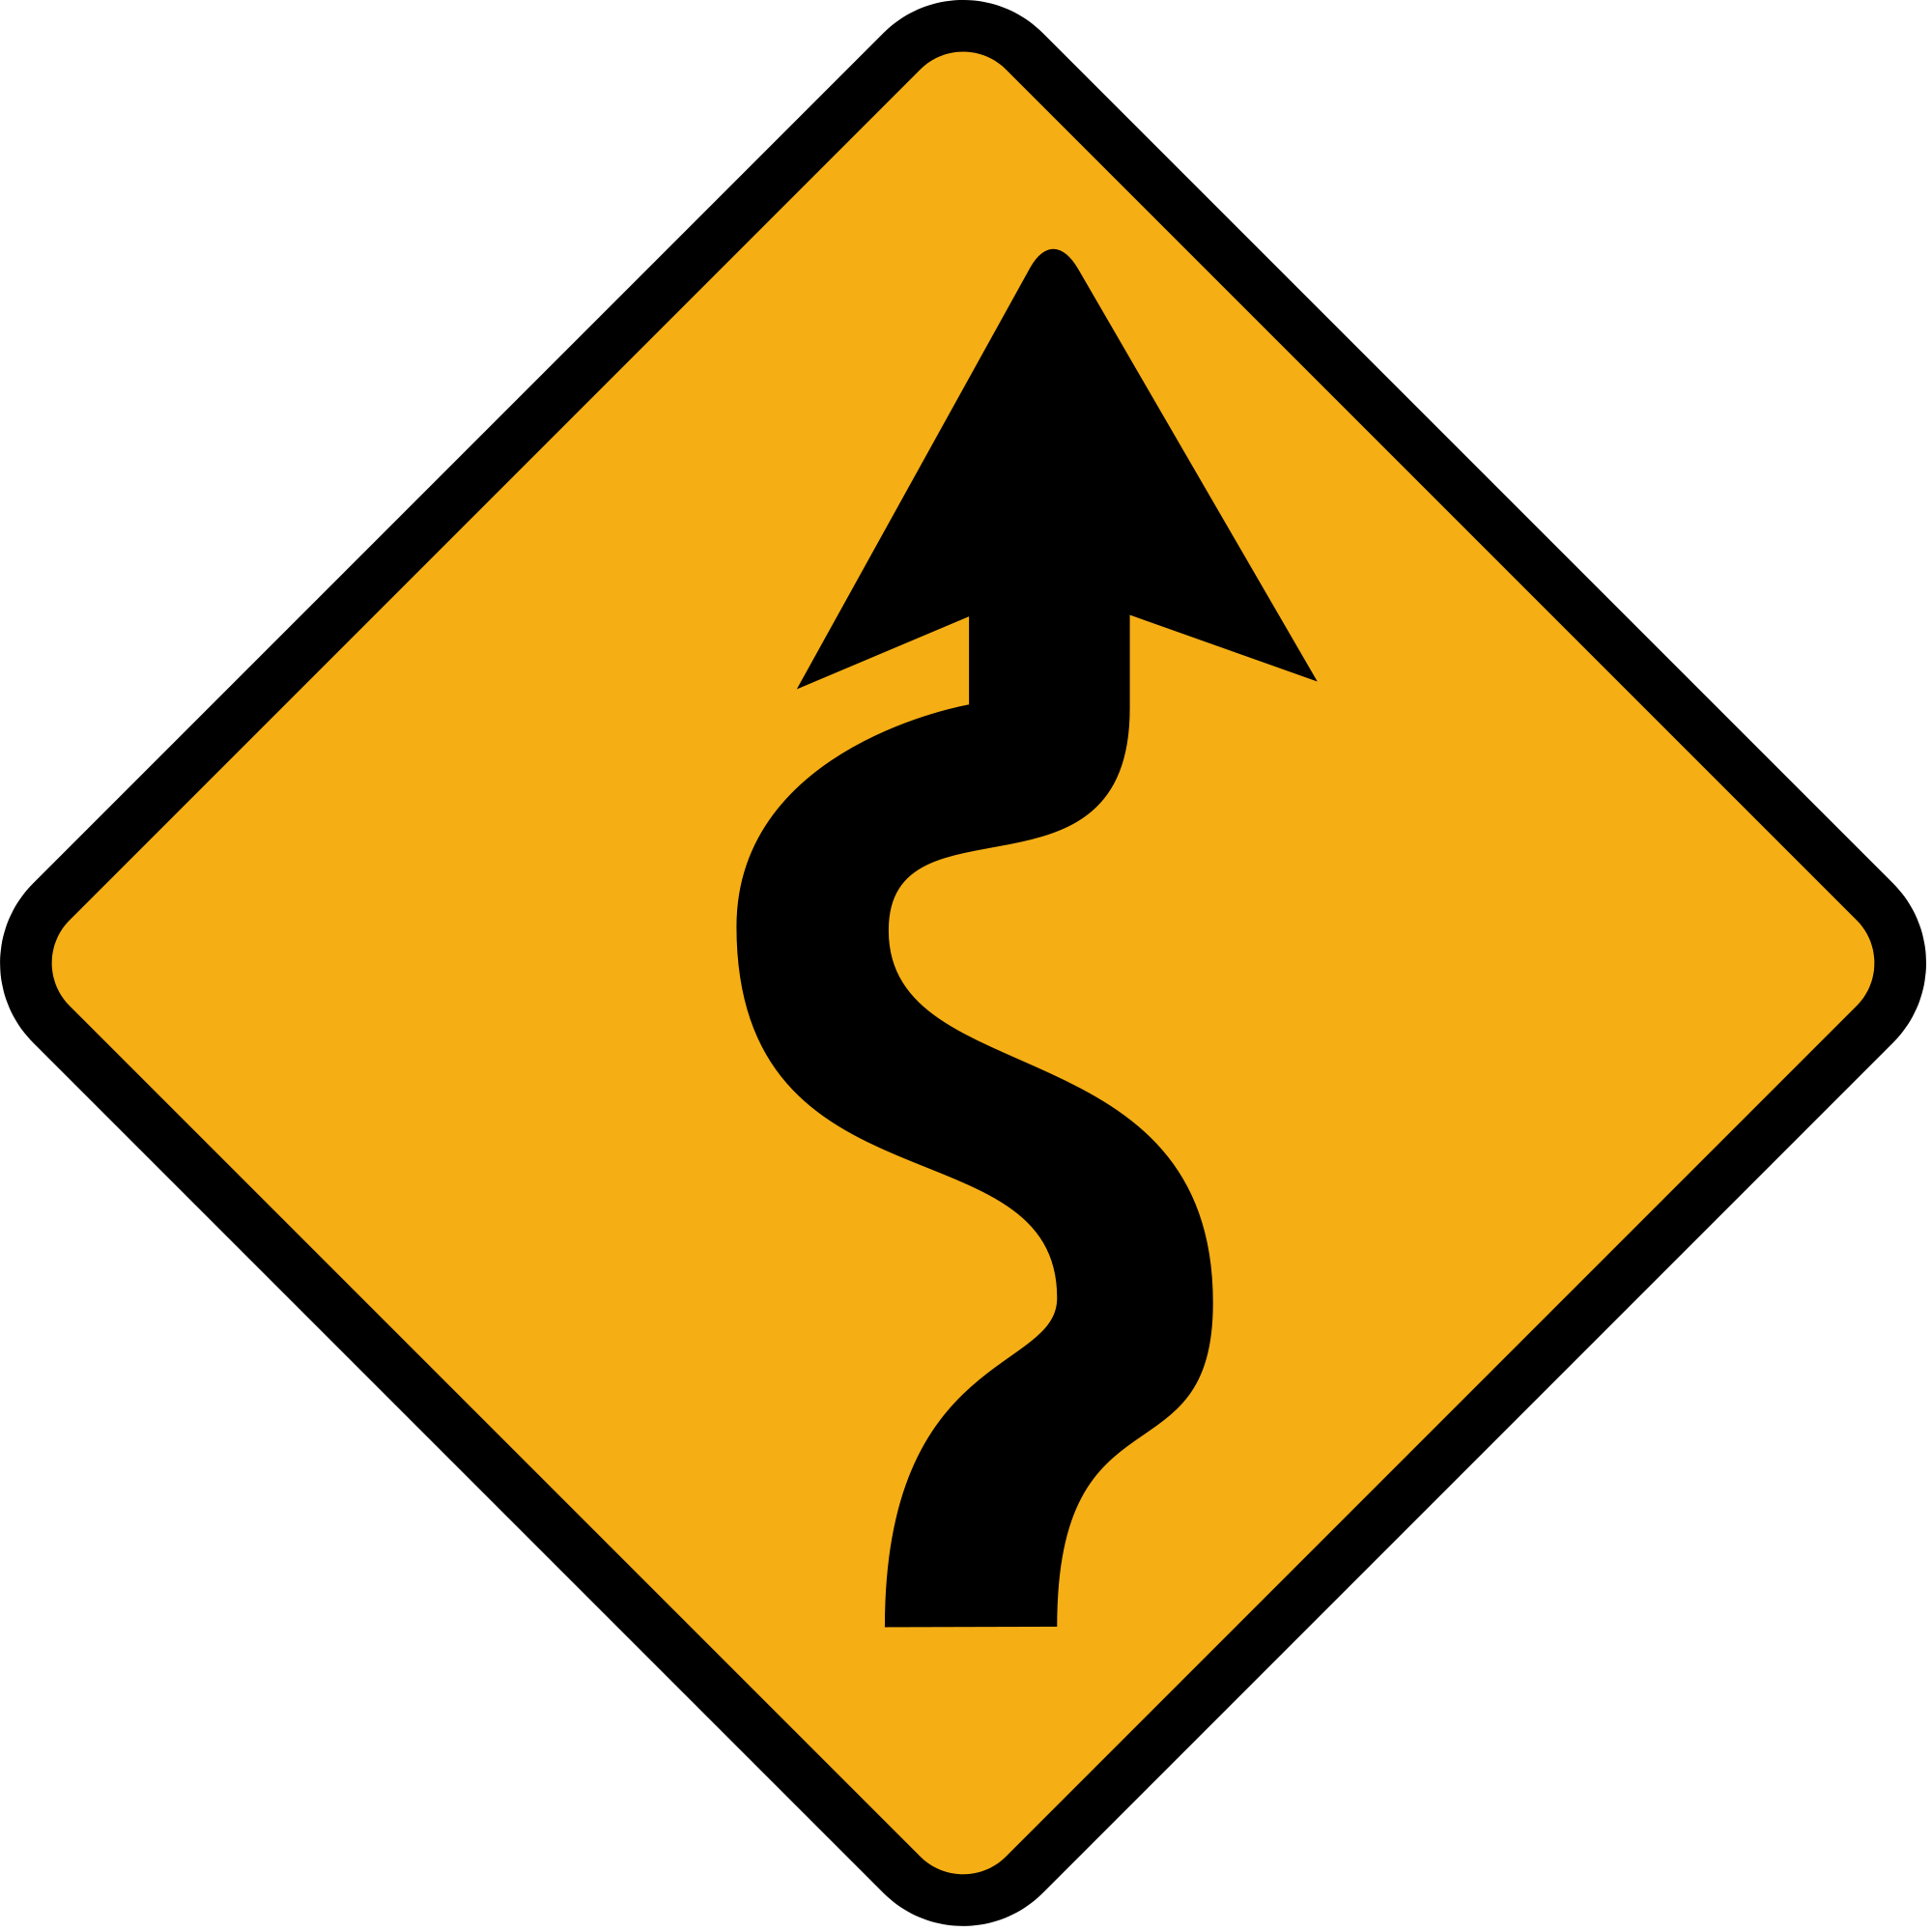 File:Diamond road sign dangerous bends.svg